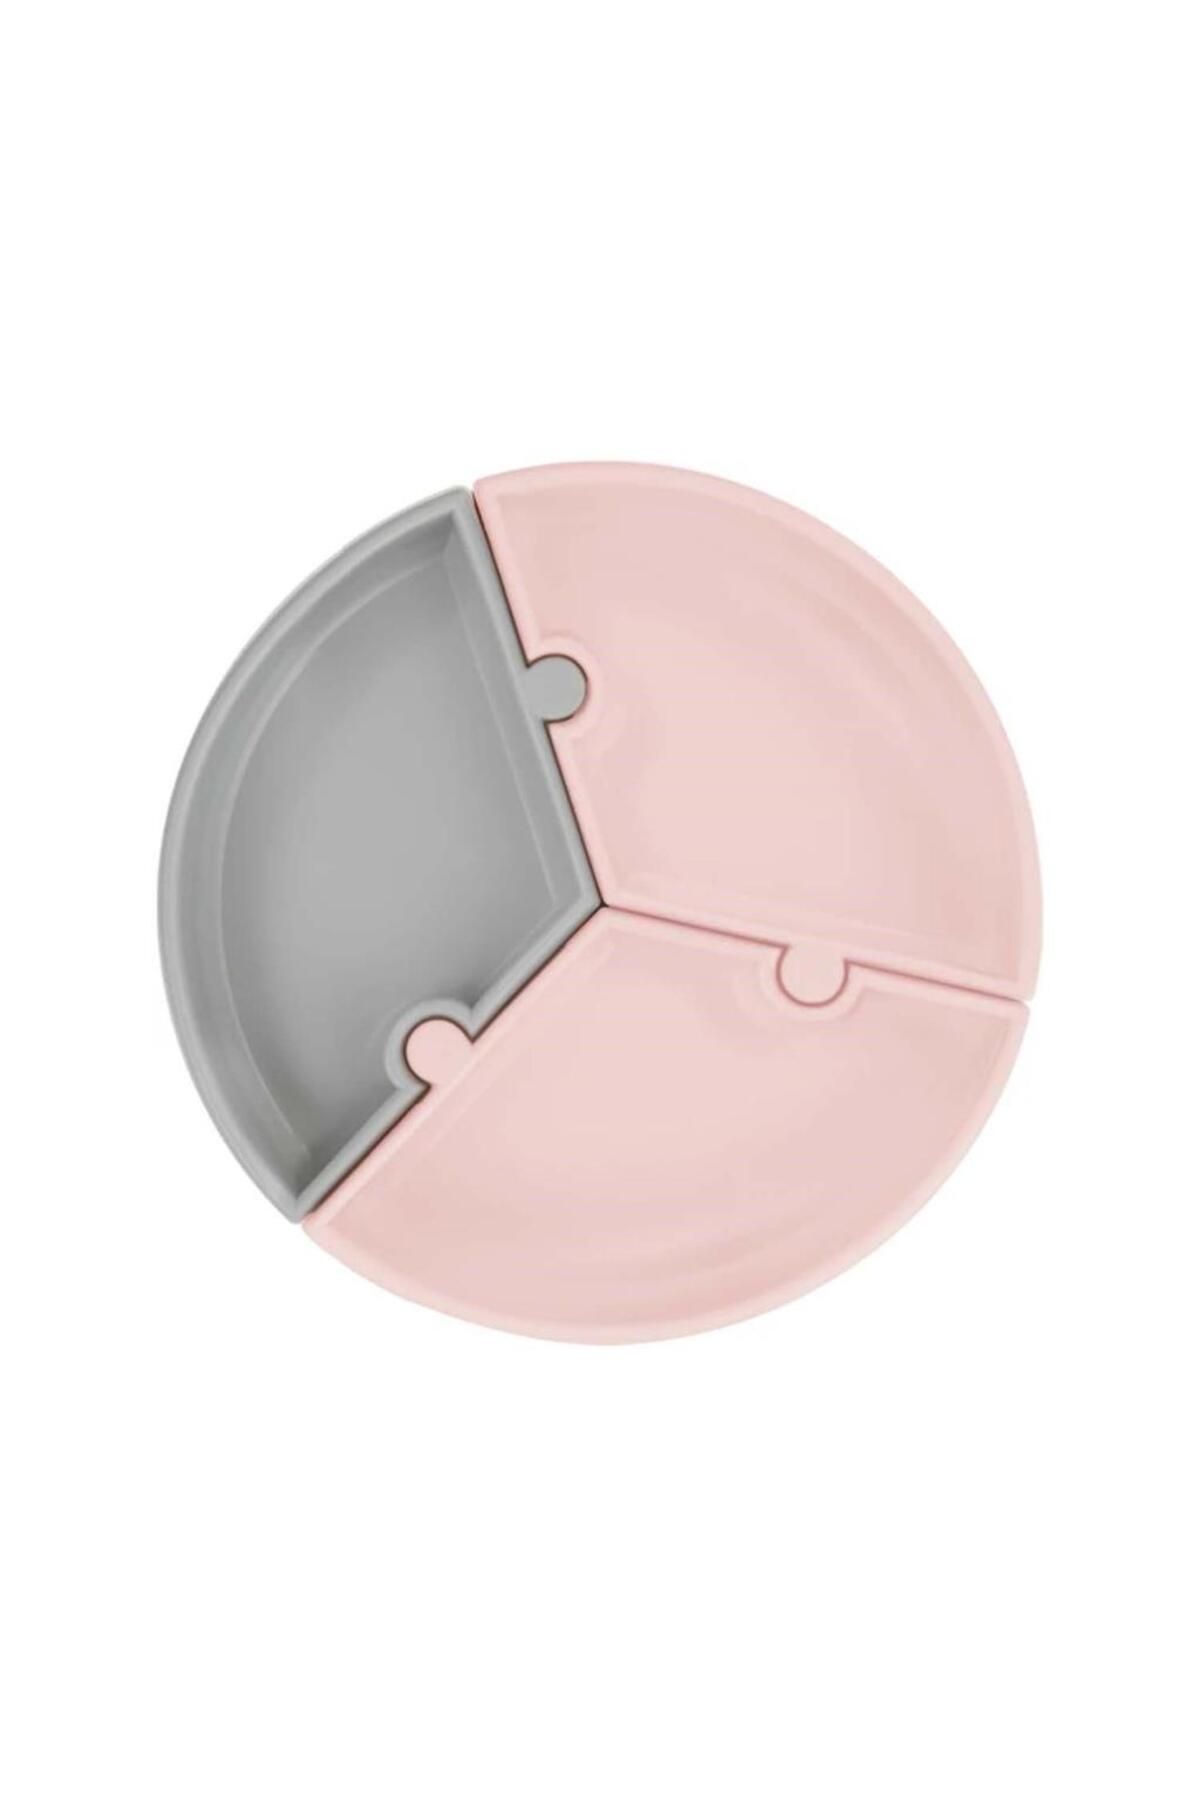 NessiWorld OiOi Puzzle Vakum Tabanlı Silikon Tabak Pinky Pink / Powder Grey